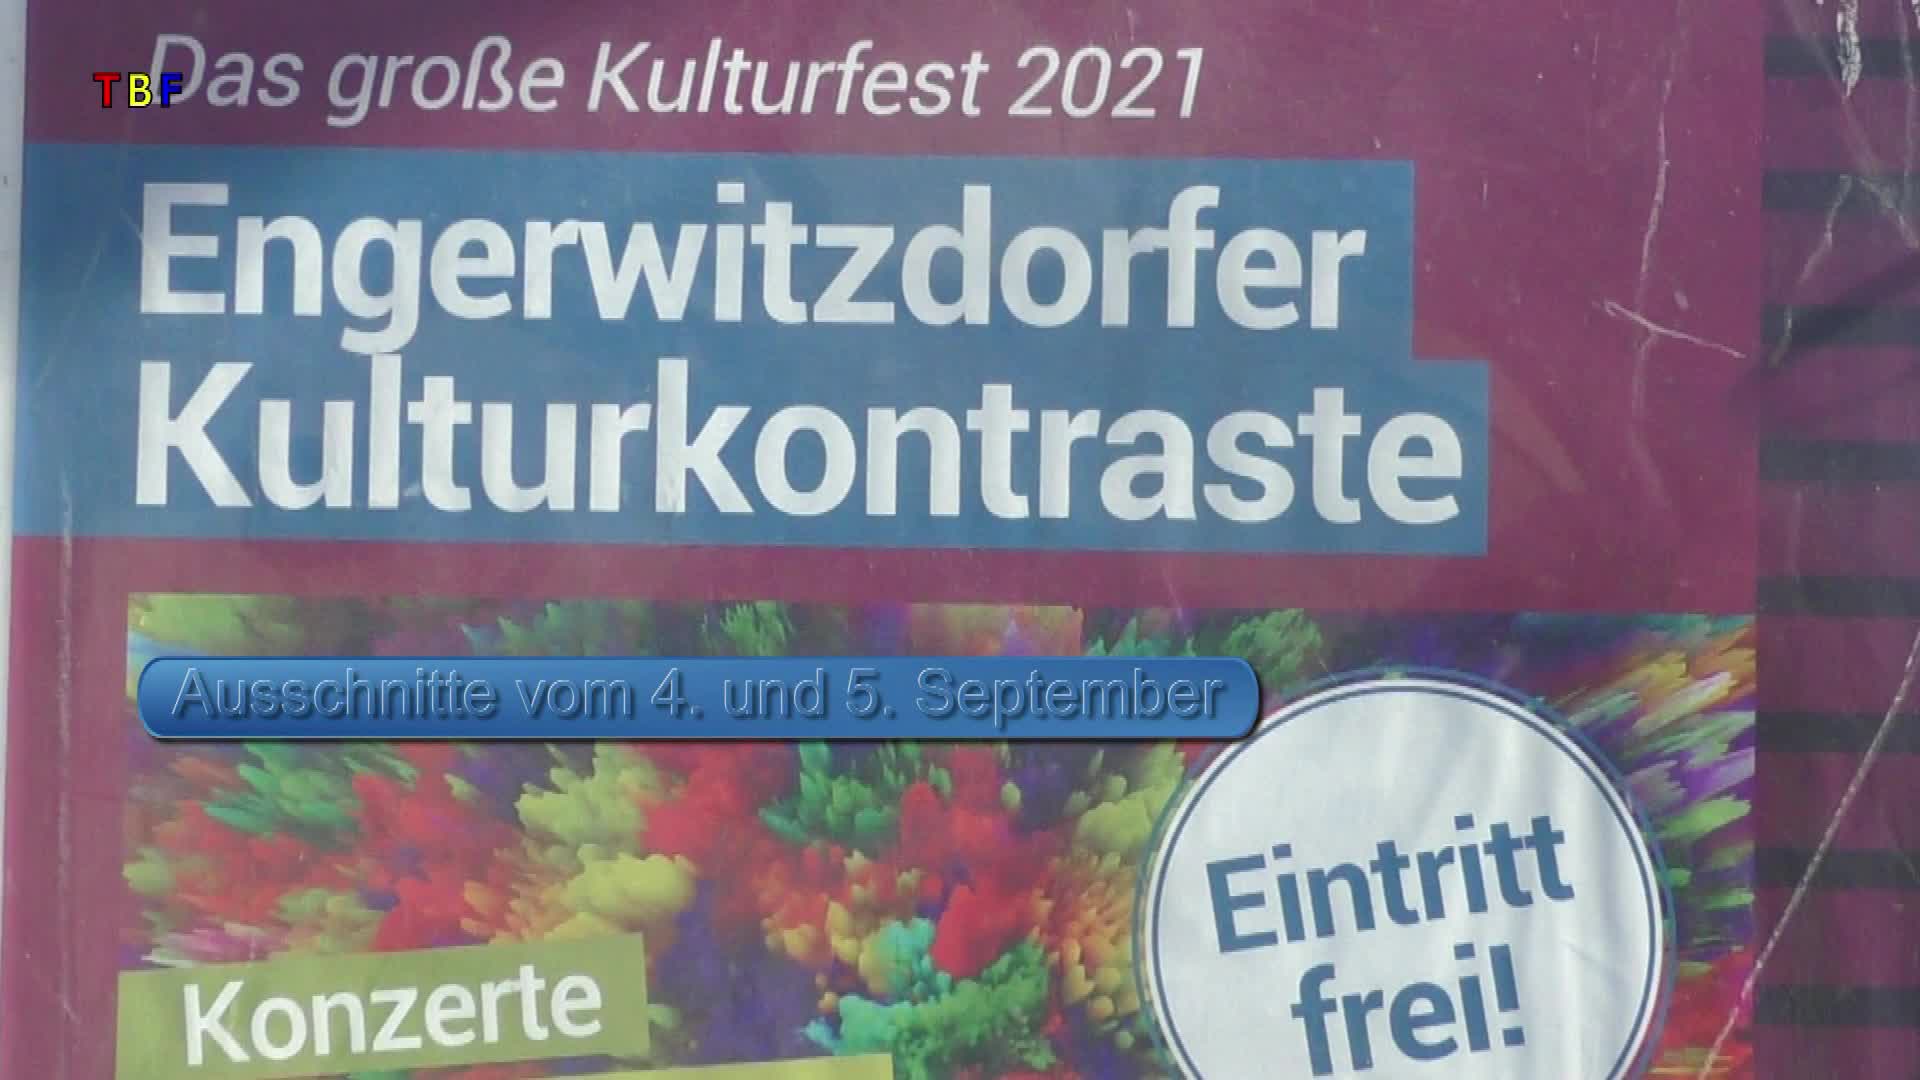 Engerwitzdorfer Kulturkontraste 2021